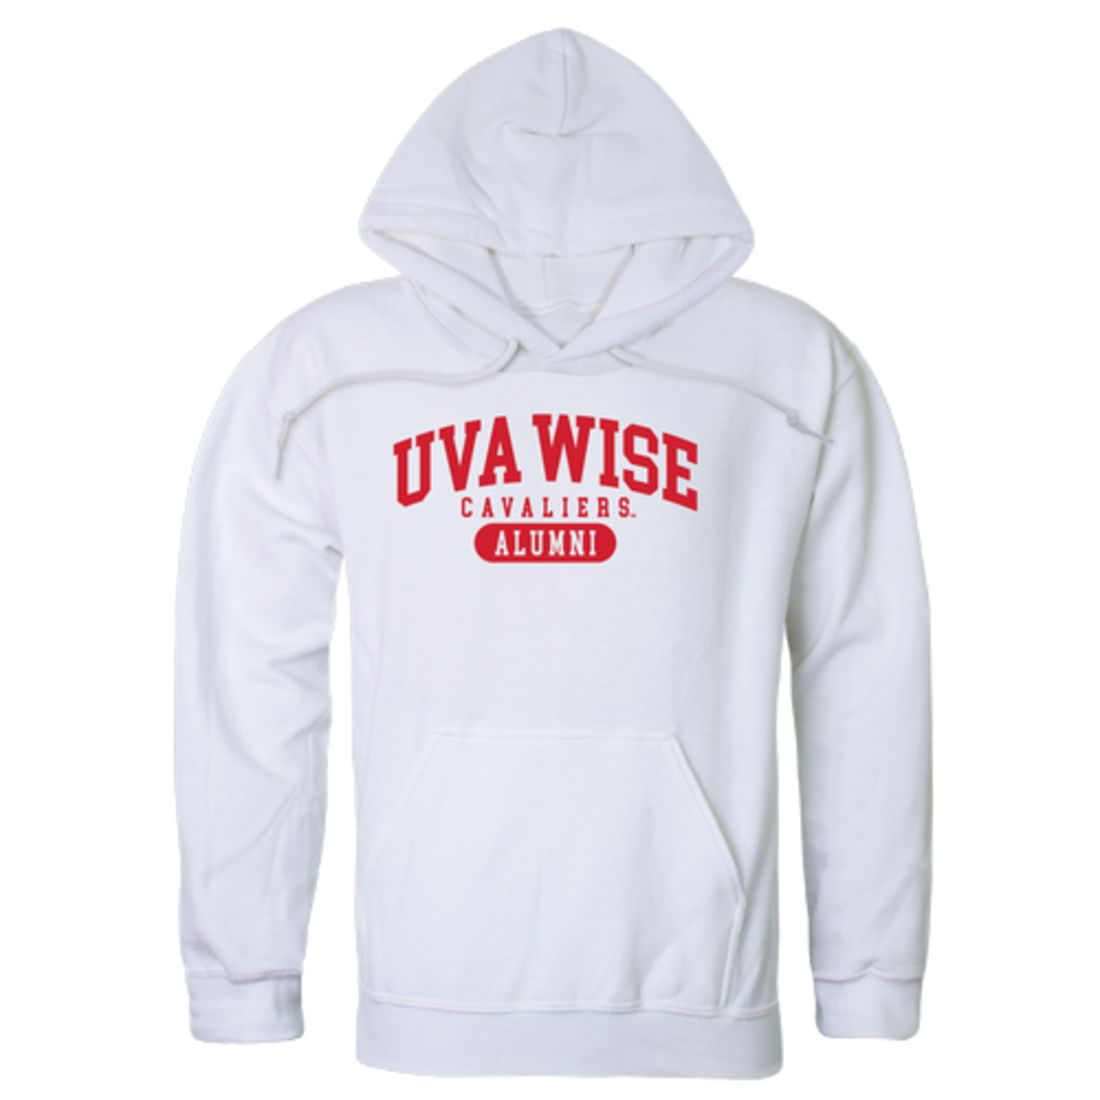 University of Virginia's College at Wise Cavaliers Alumni Fleece Hoodie Sweatshirts